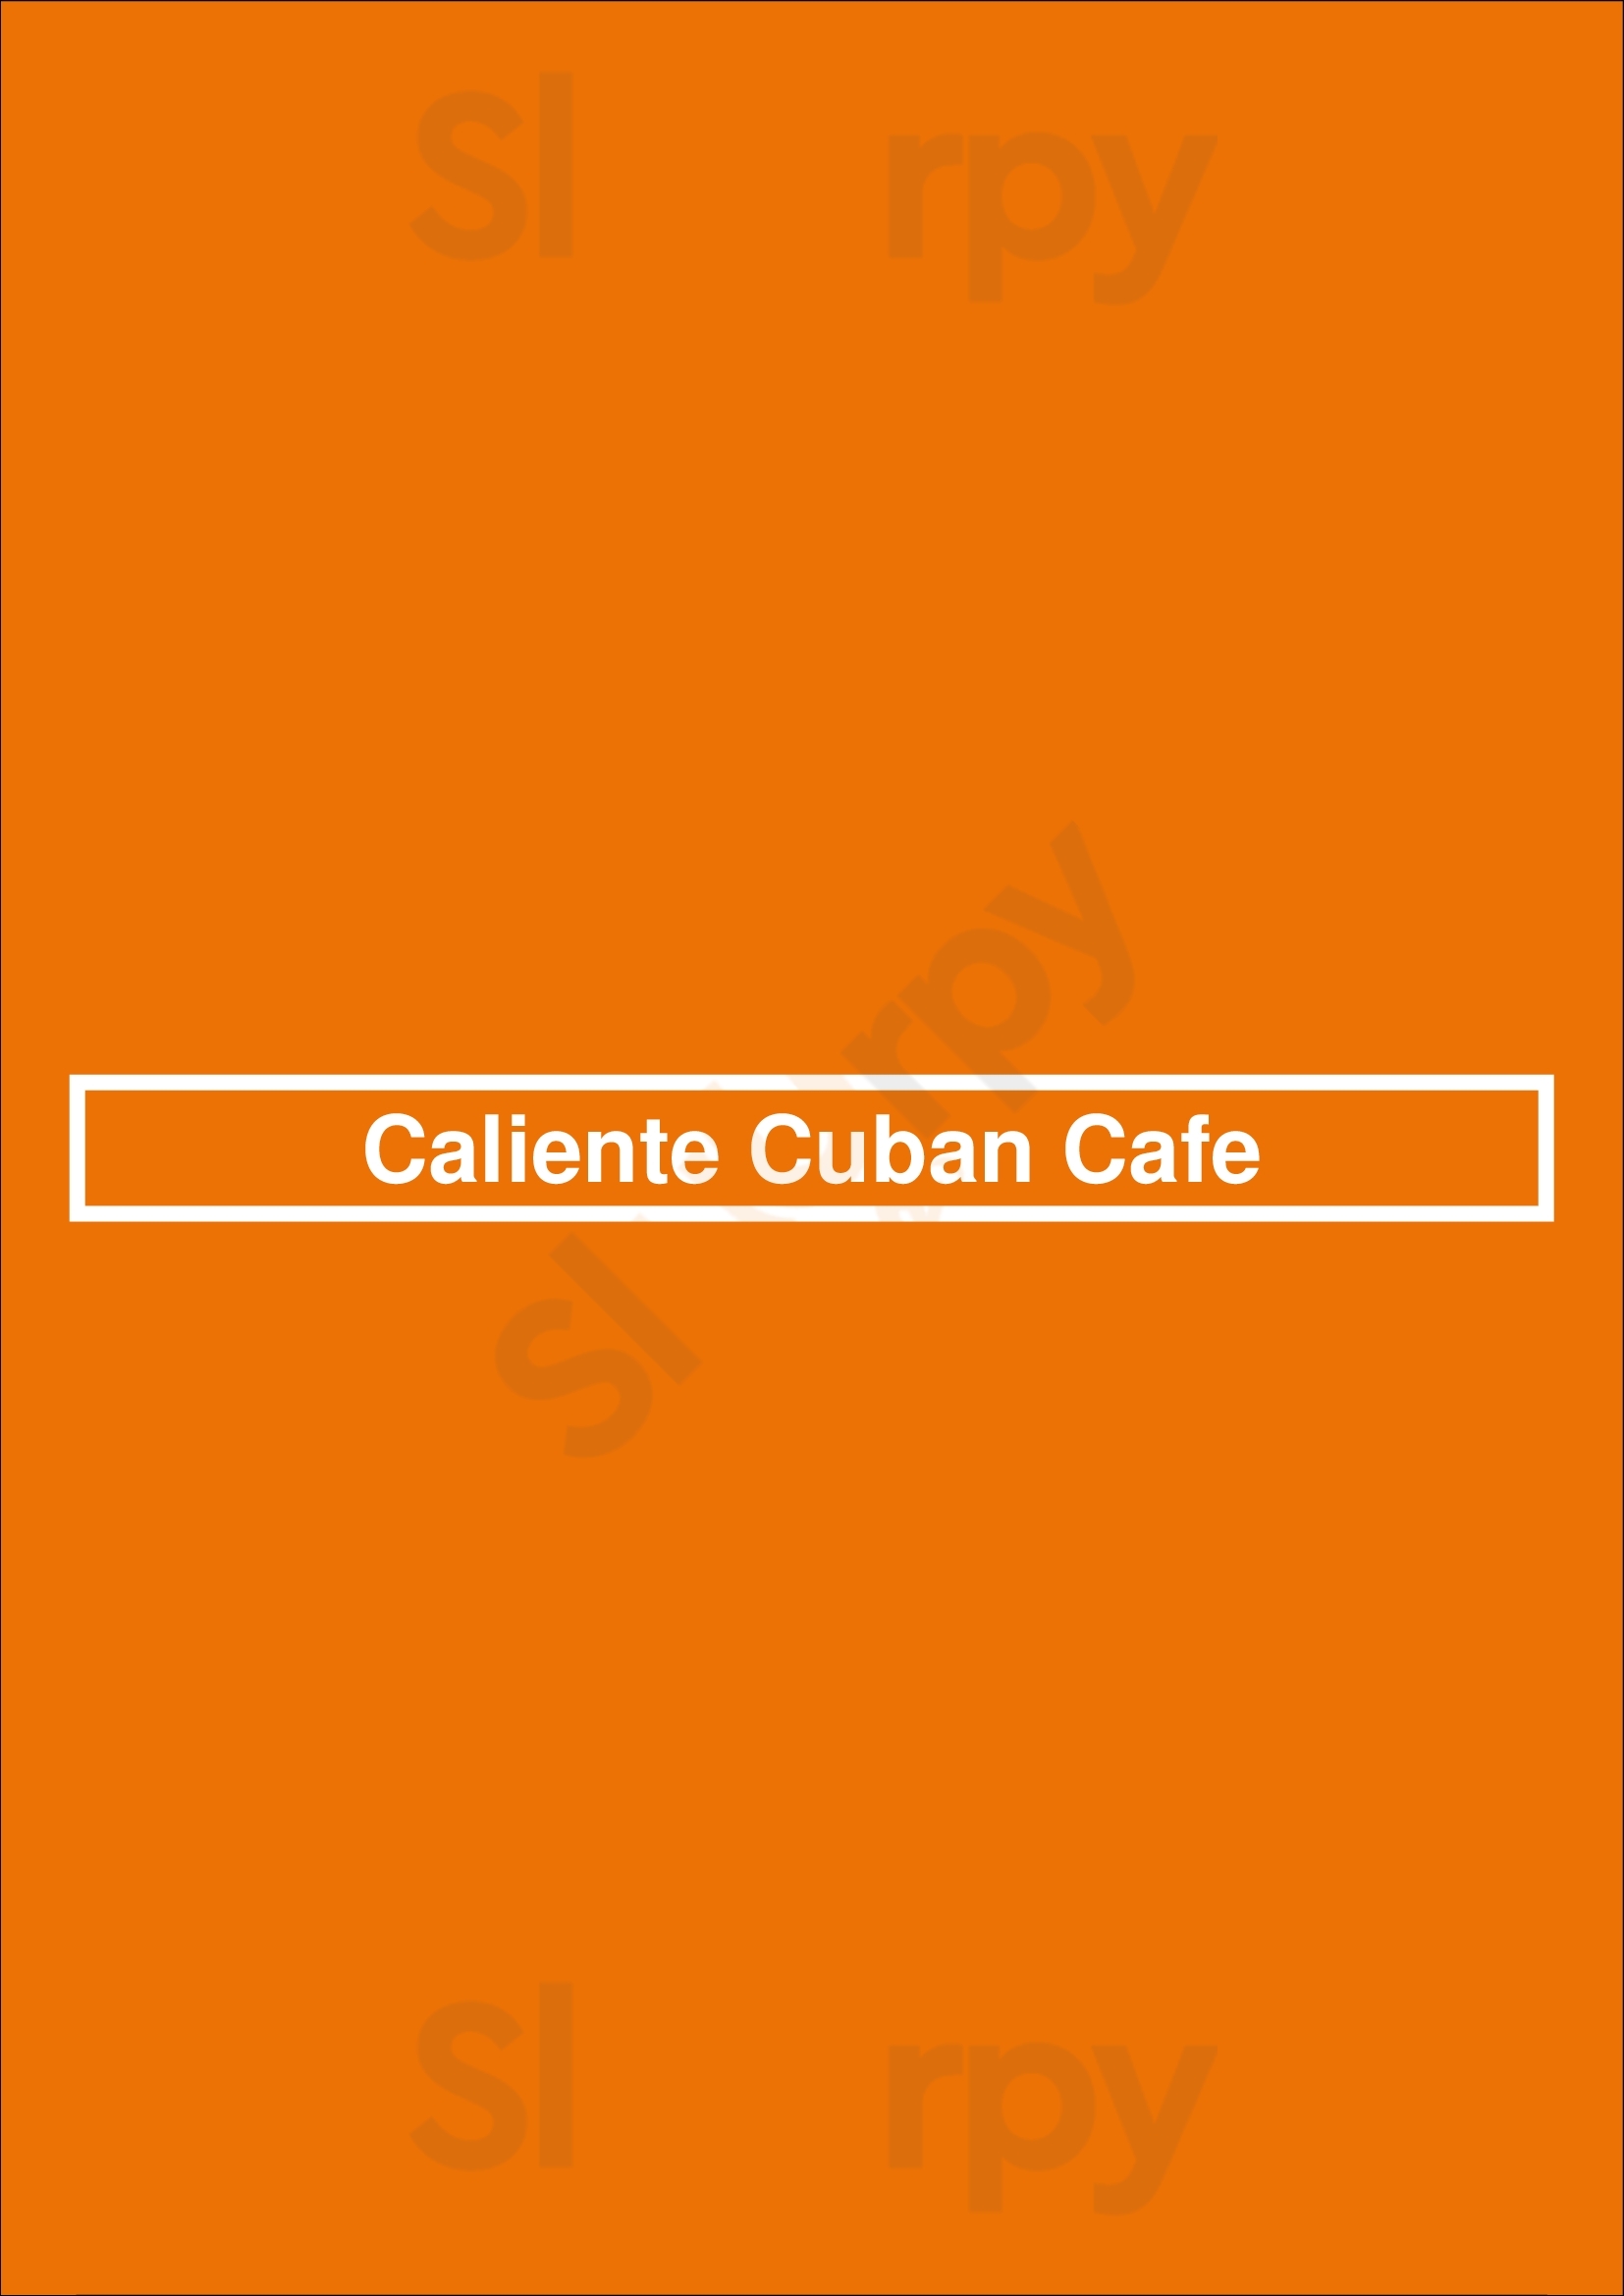 Caliente Cuban Cafe Fort Wayne Menu - 1